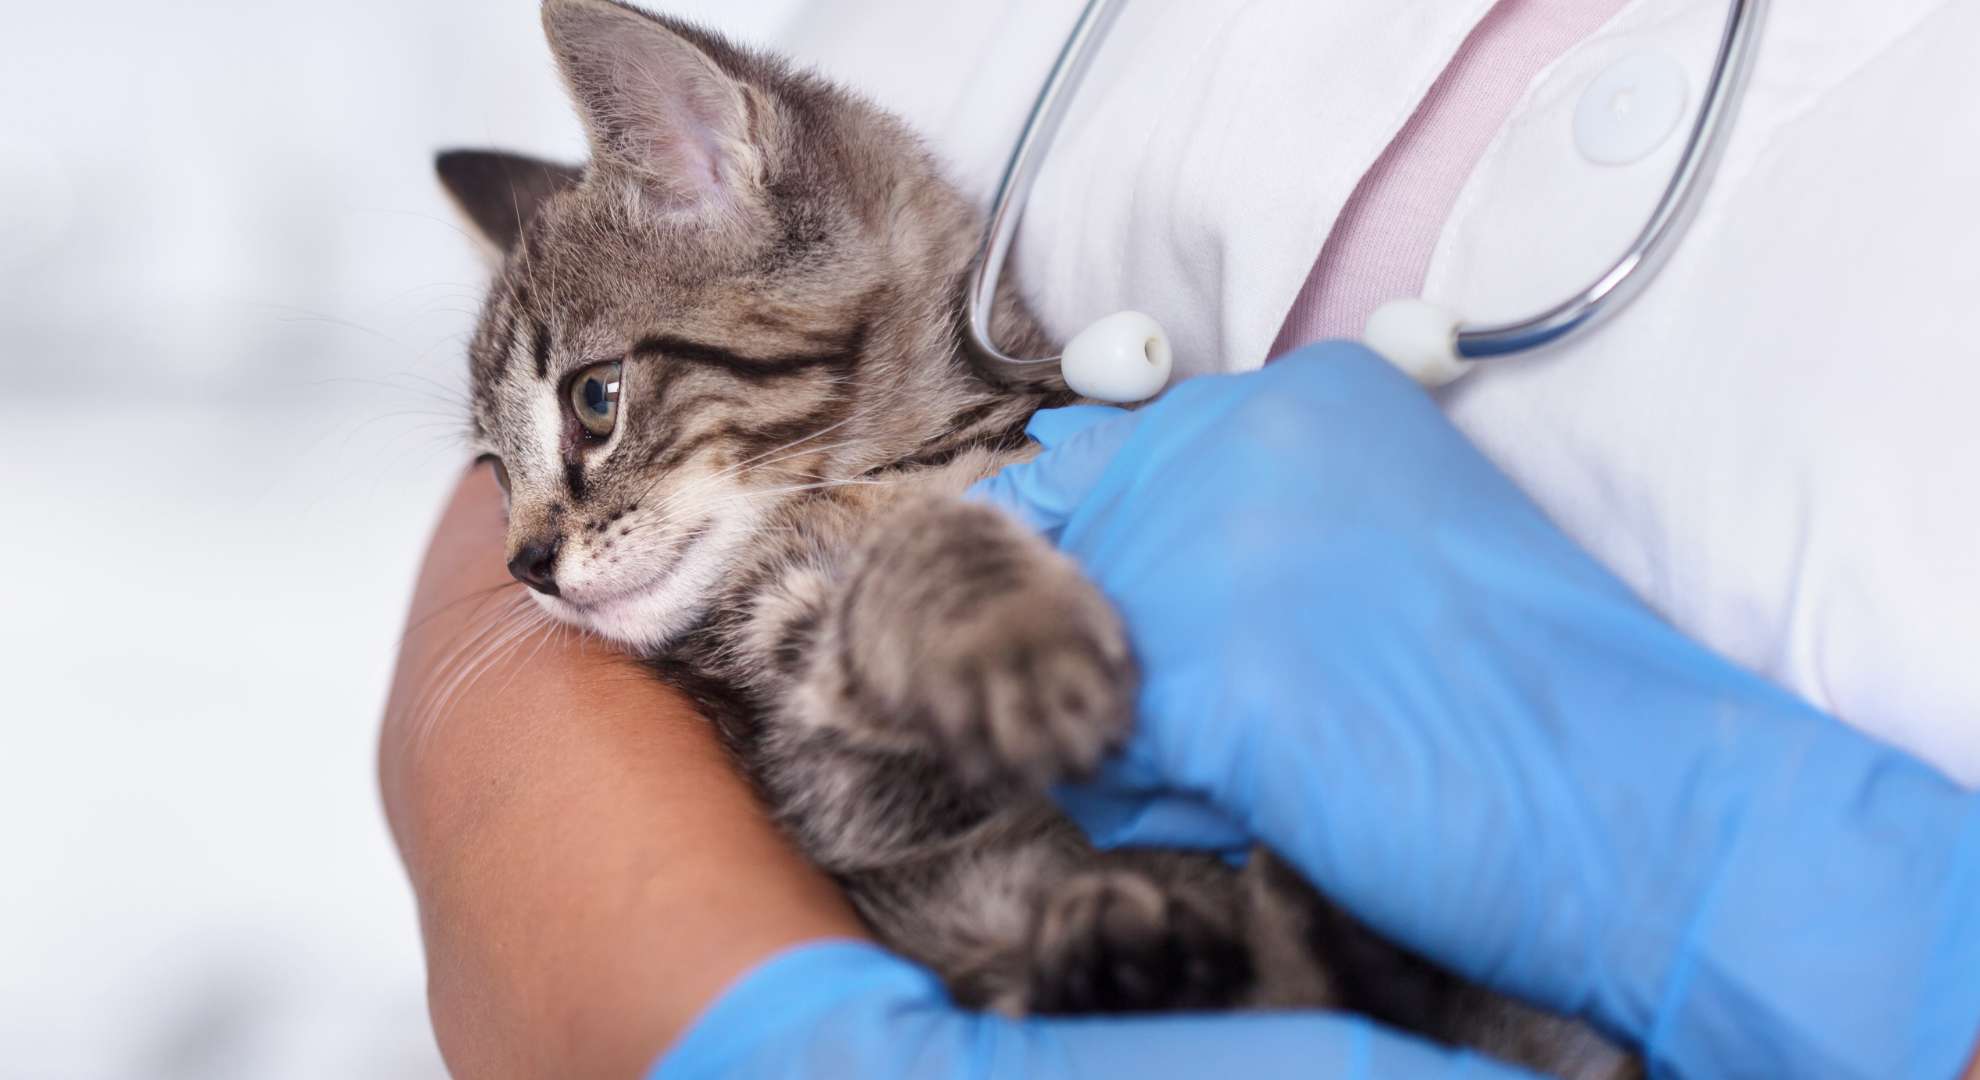 veterinarian checks kitten heartbeat